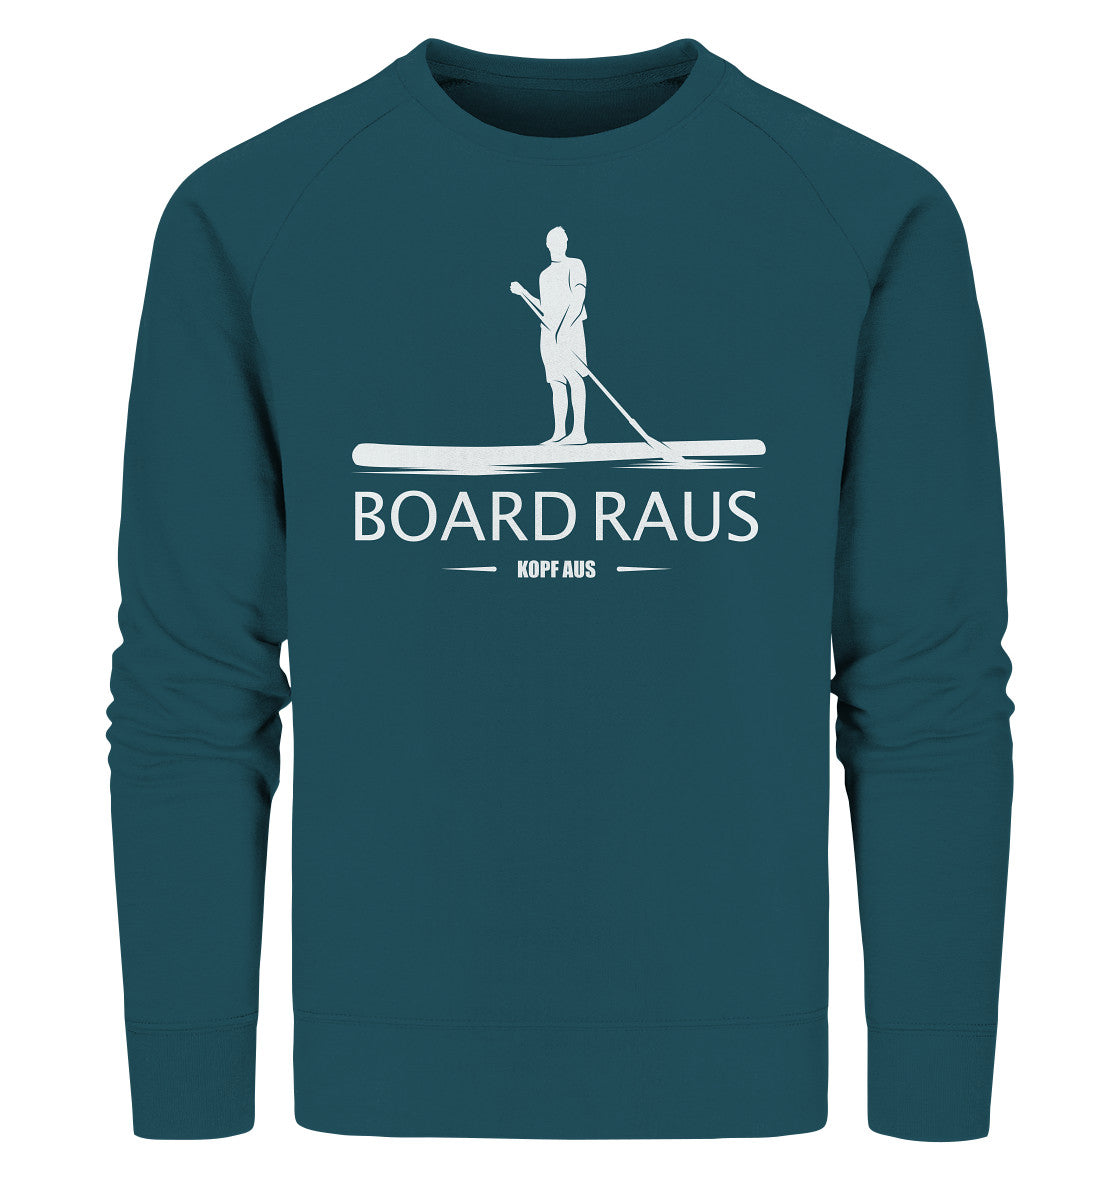 Board raus - Kopf aus! - Organic Sweatshirt